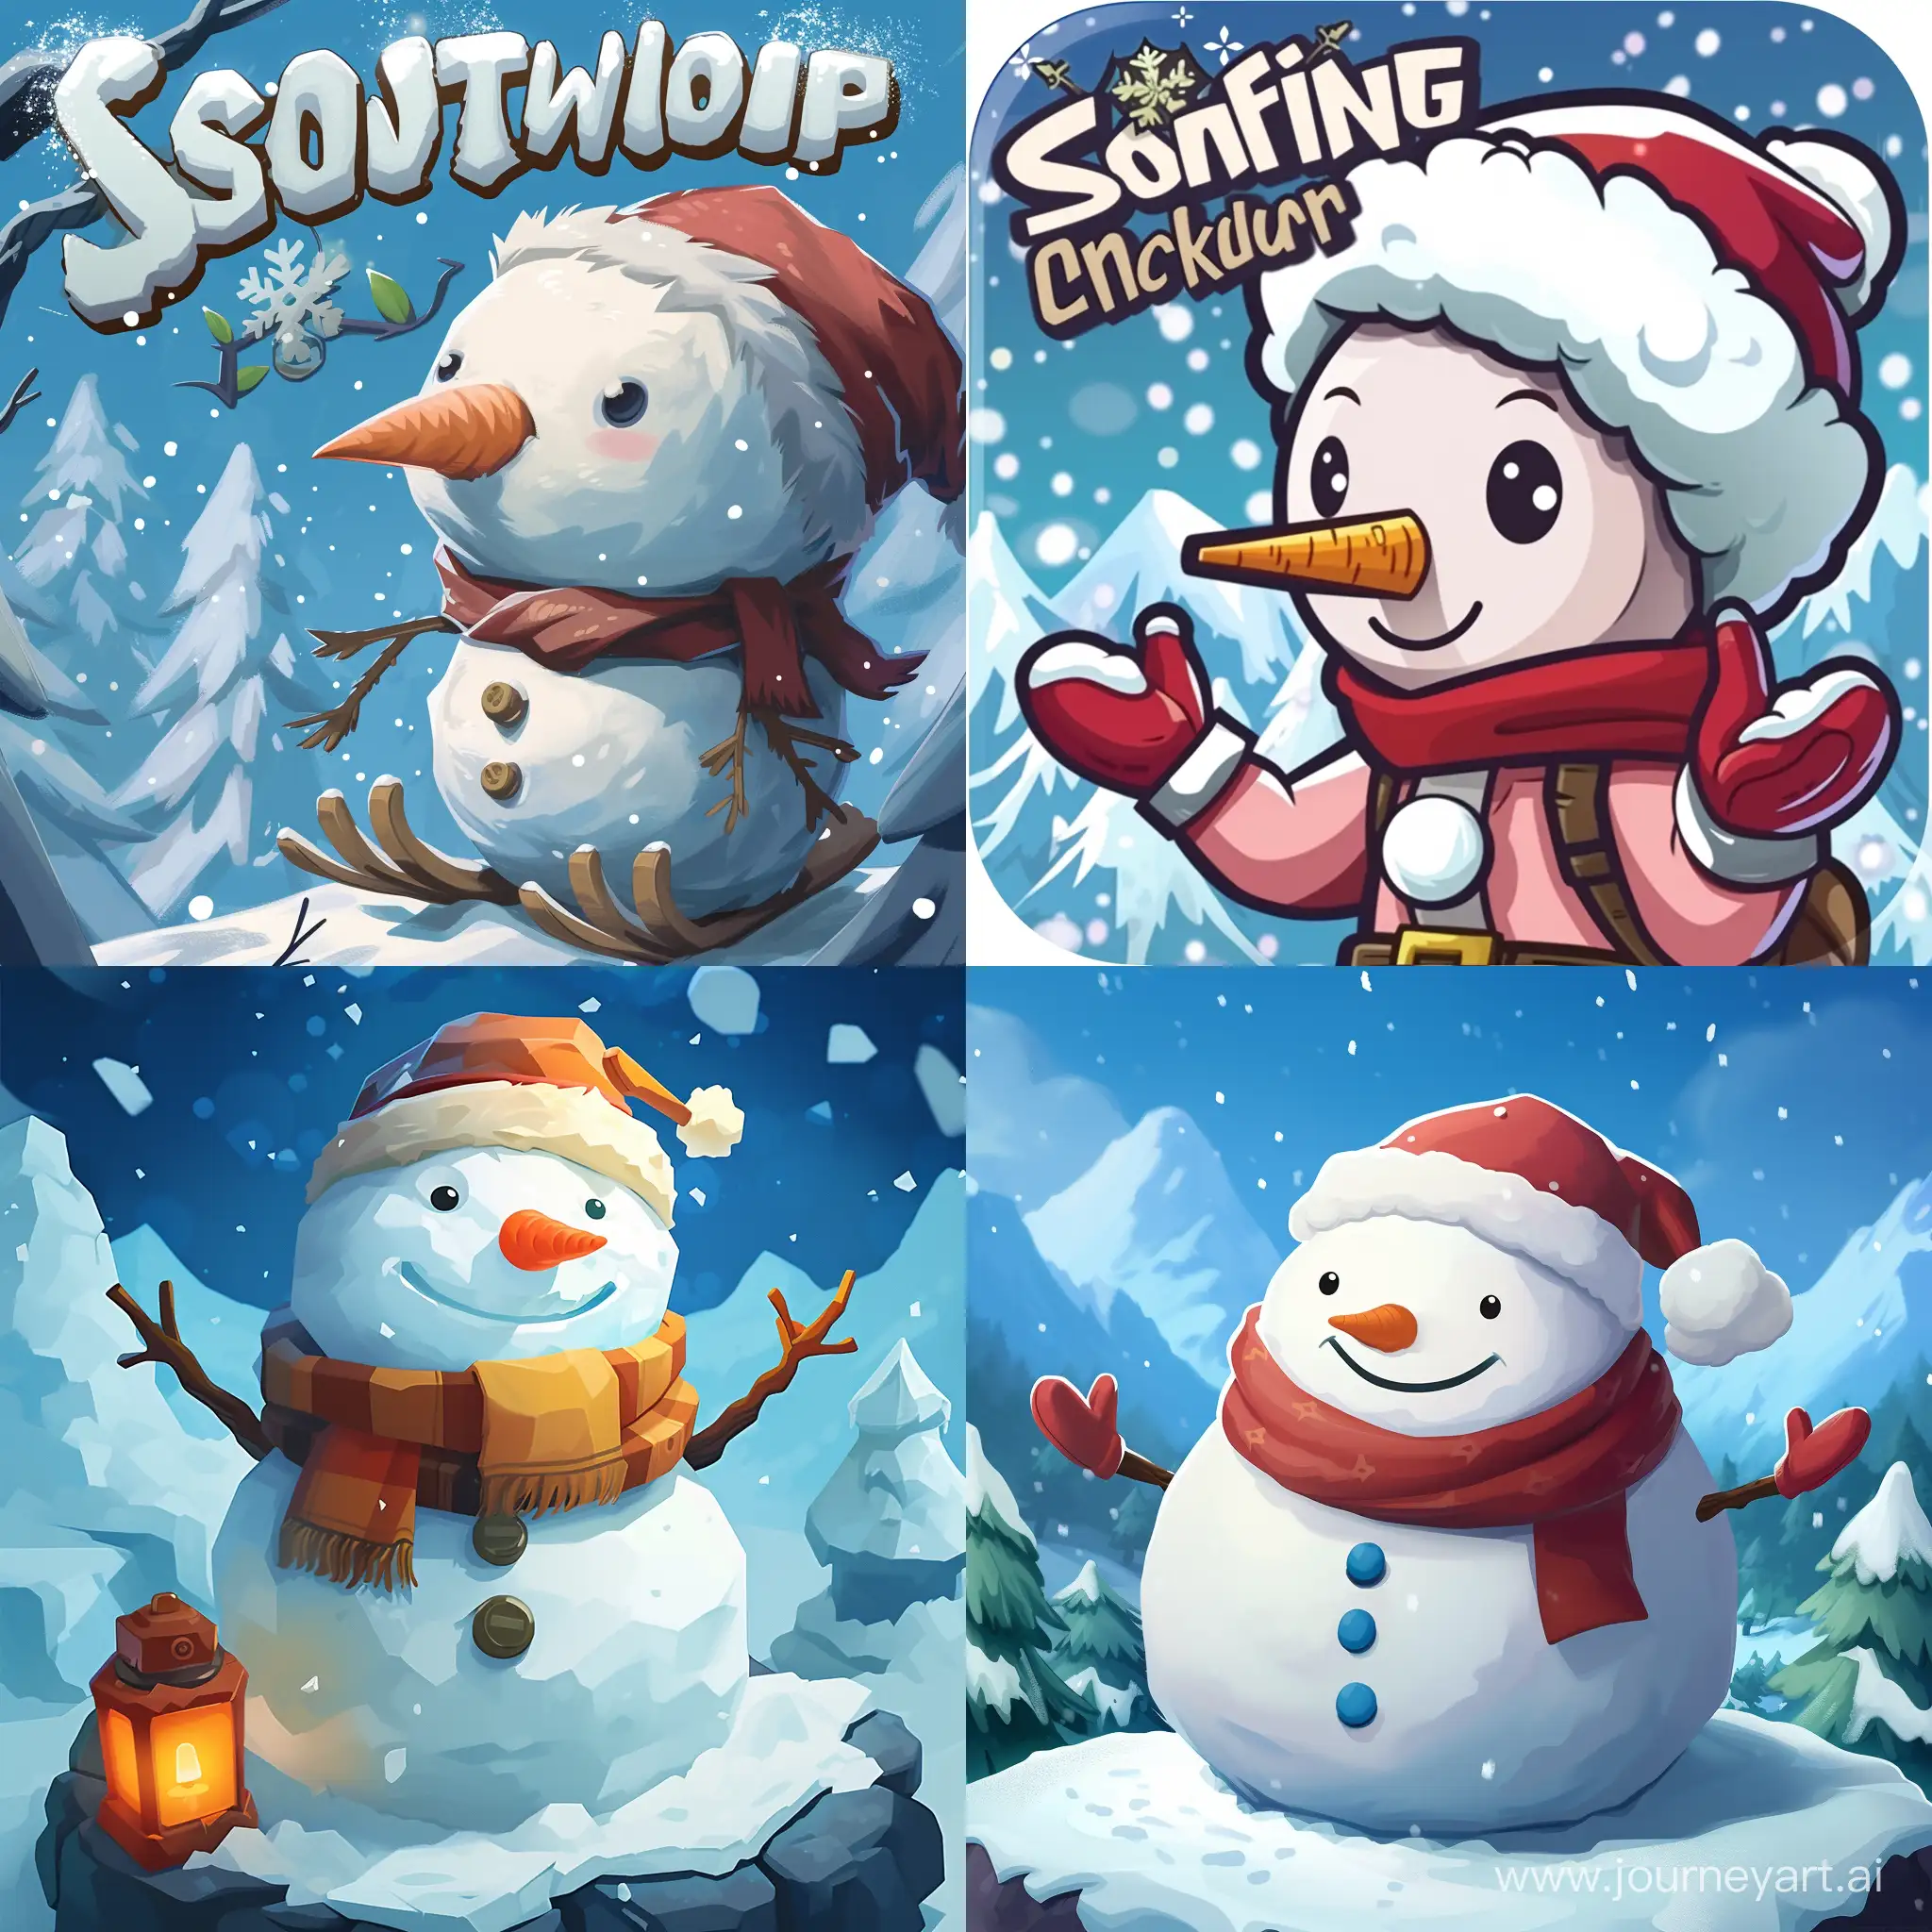 Interactive-Snowscape-Playful-Winter-Wonderland-in-Snow-Clicker-Game